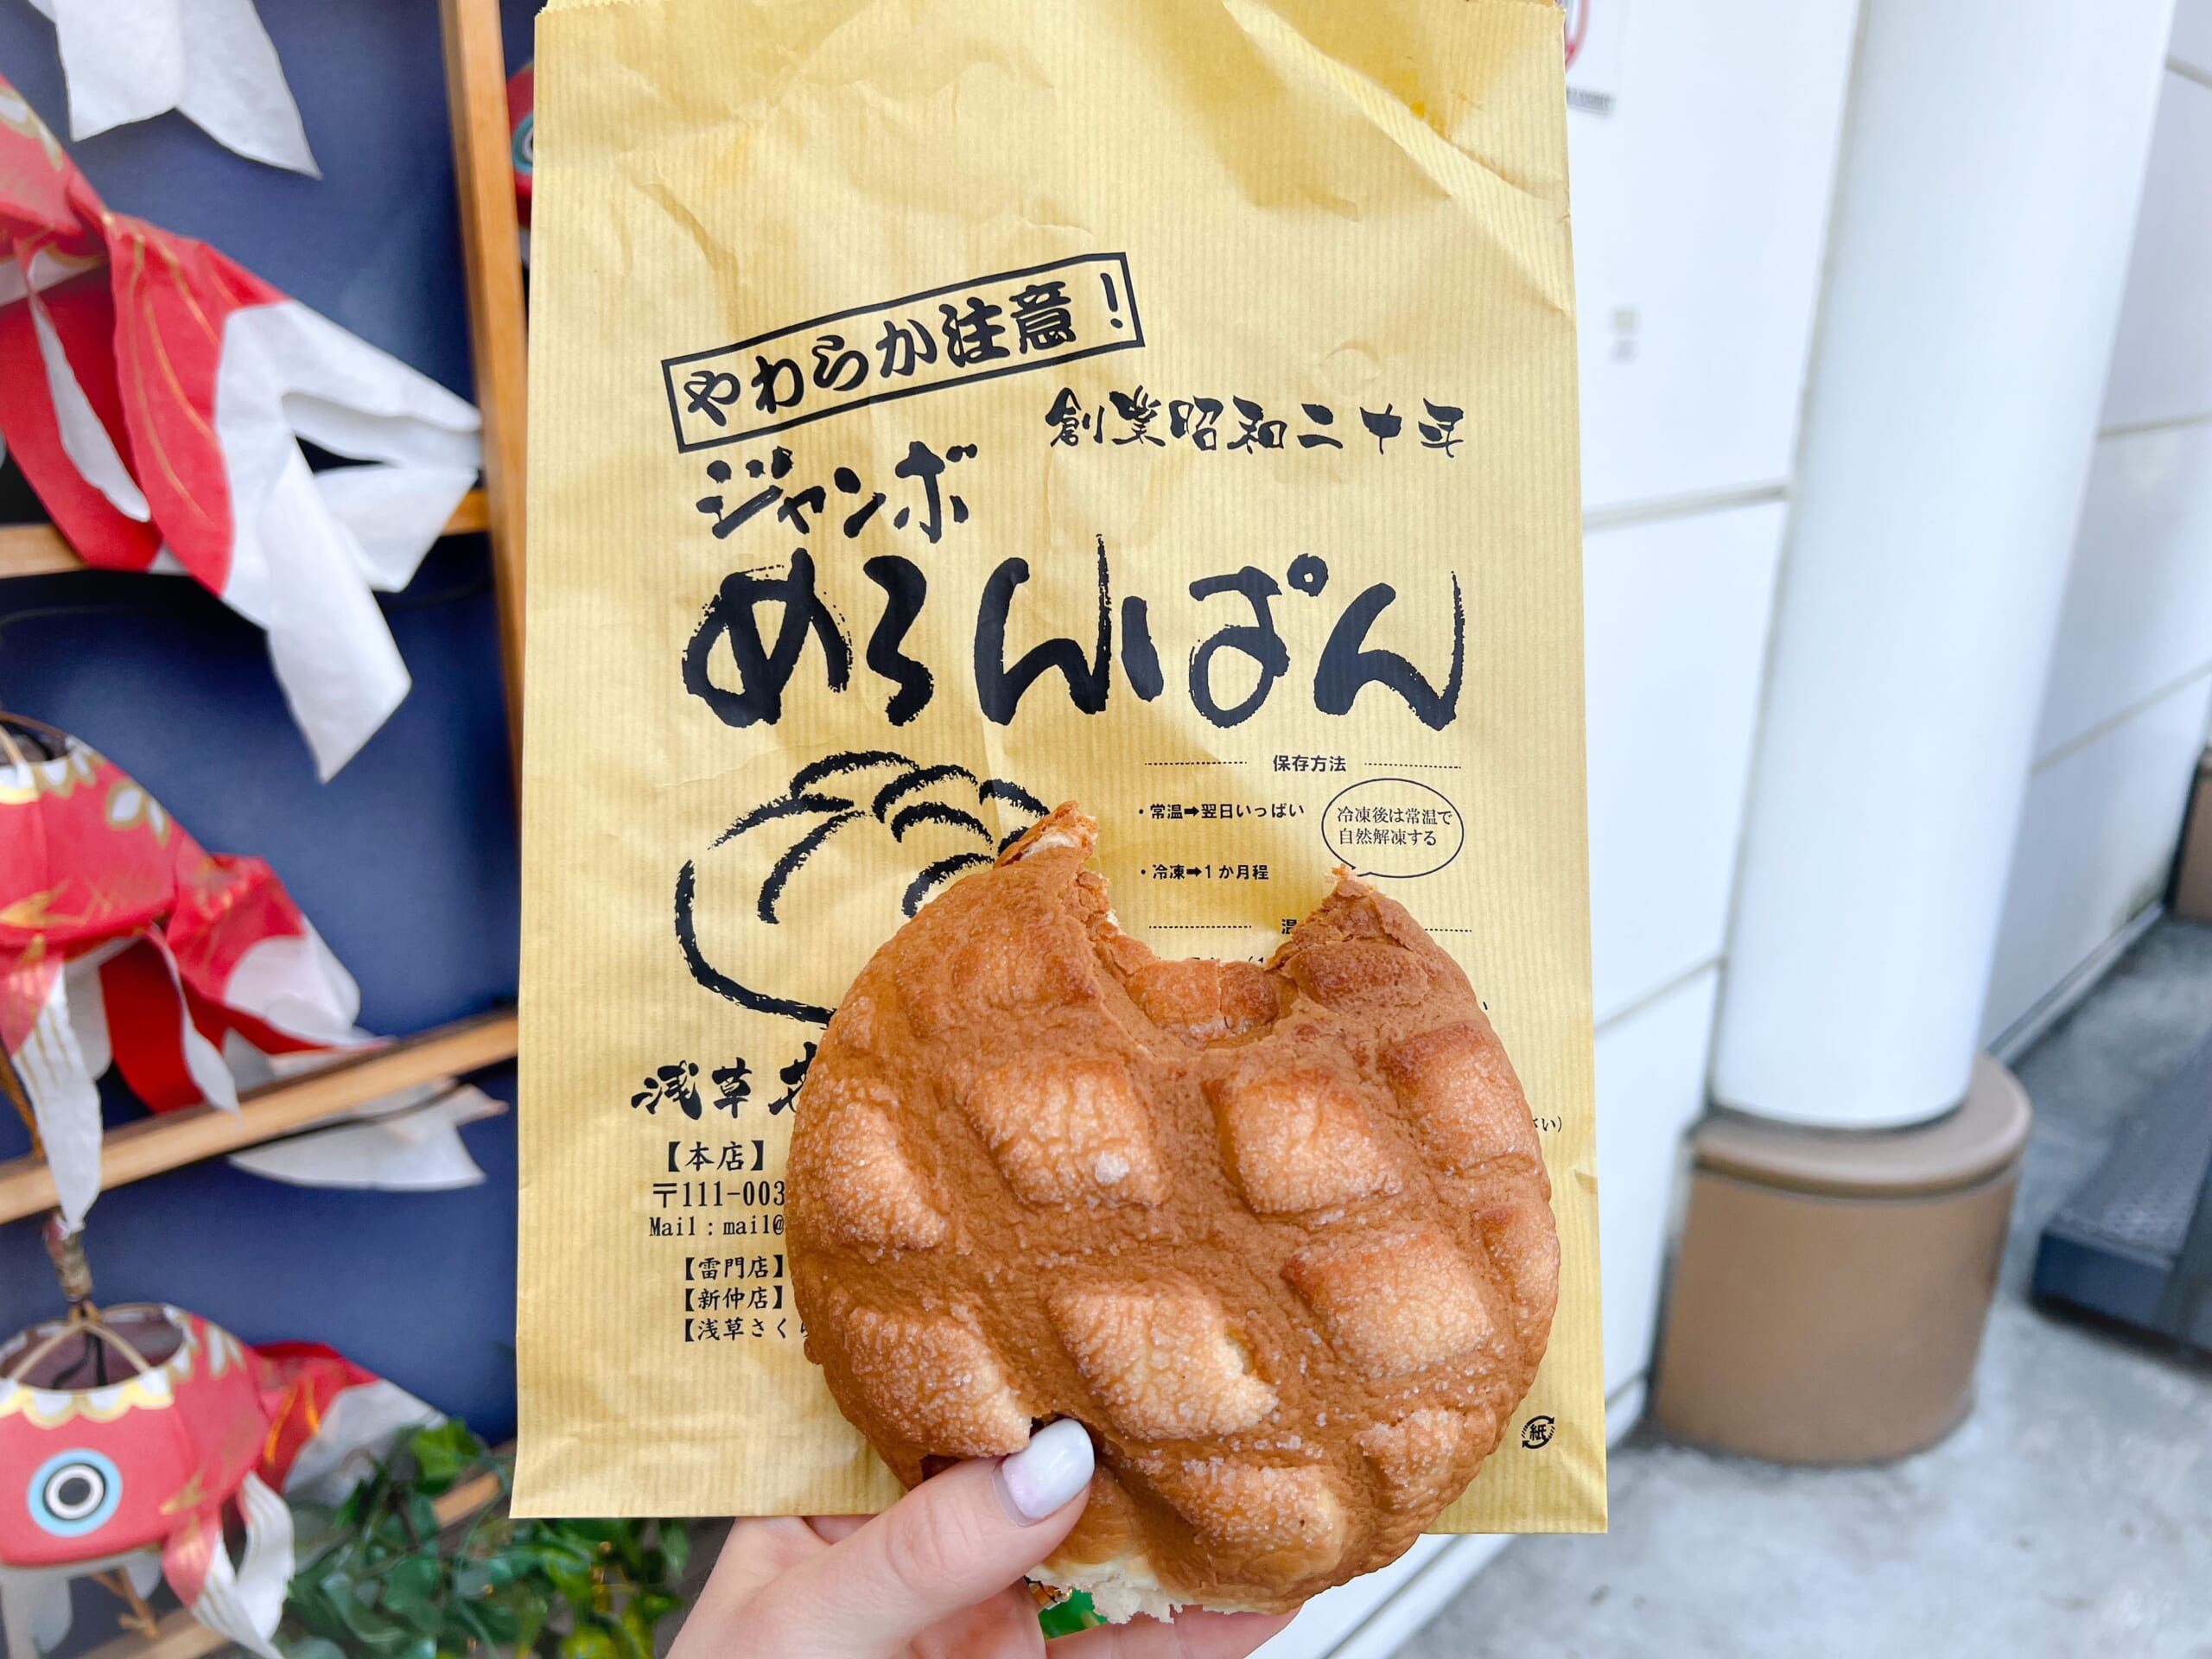 Best Street Food in Asakusa